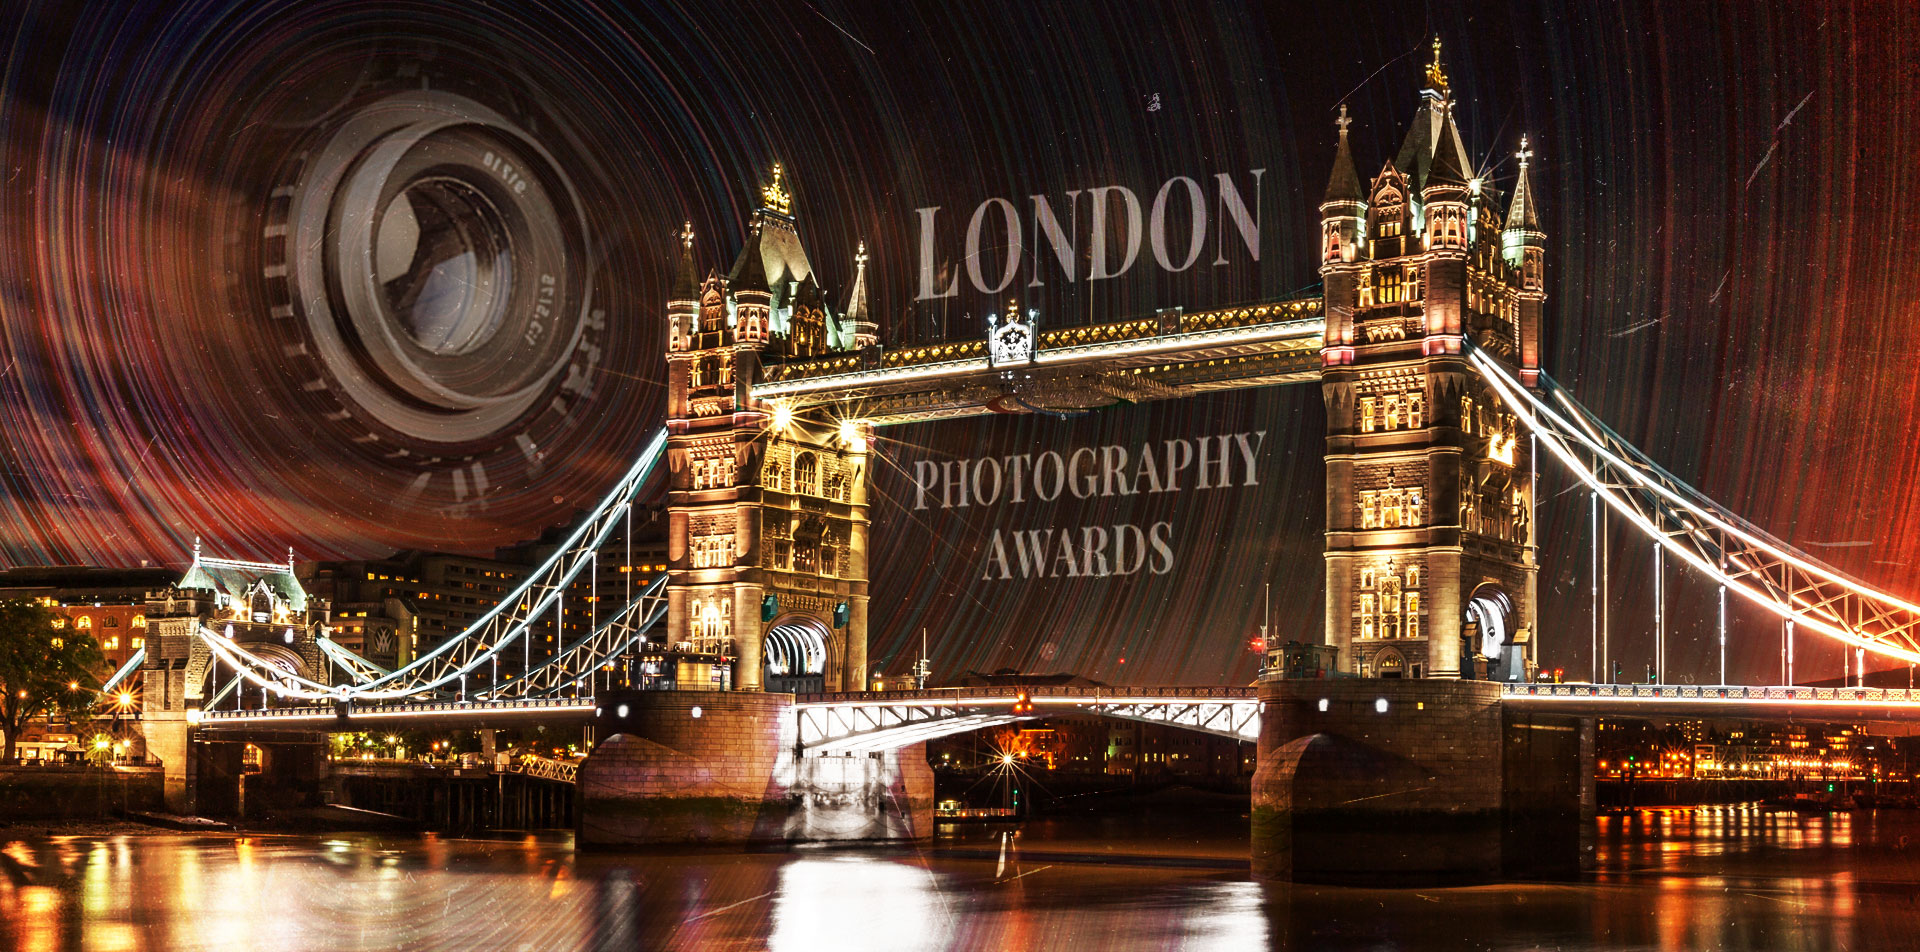 London Photography Awards 2022